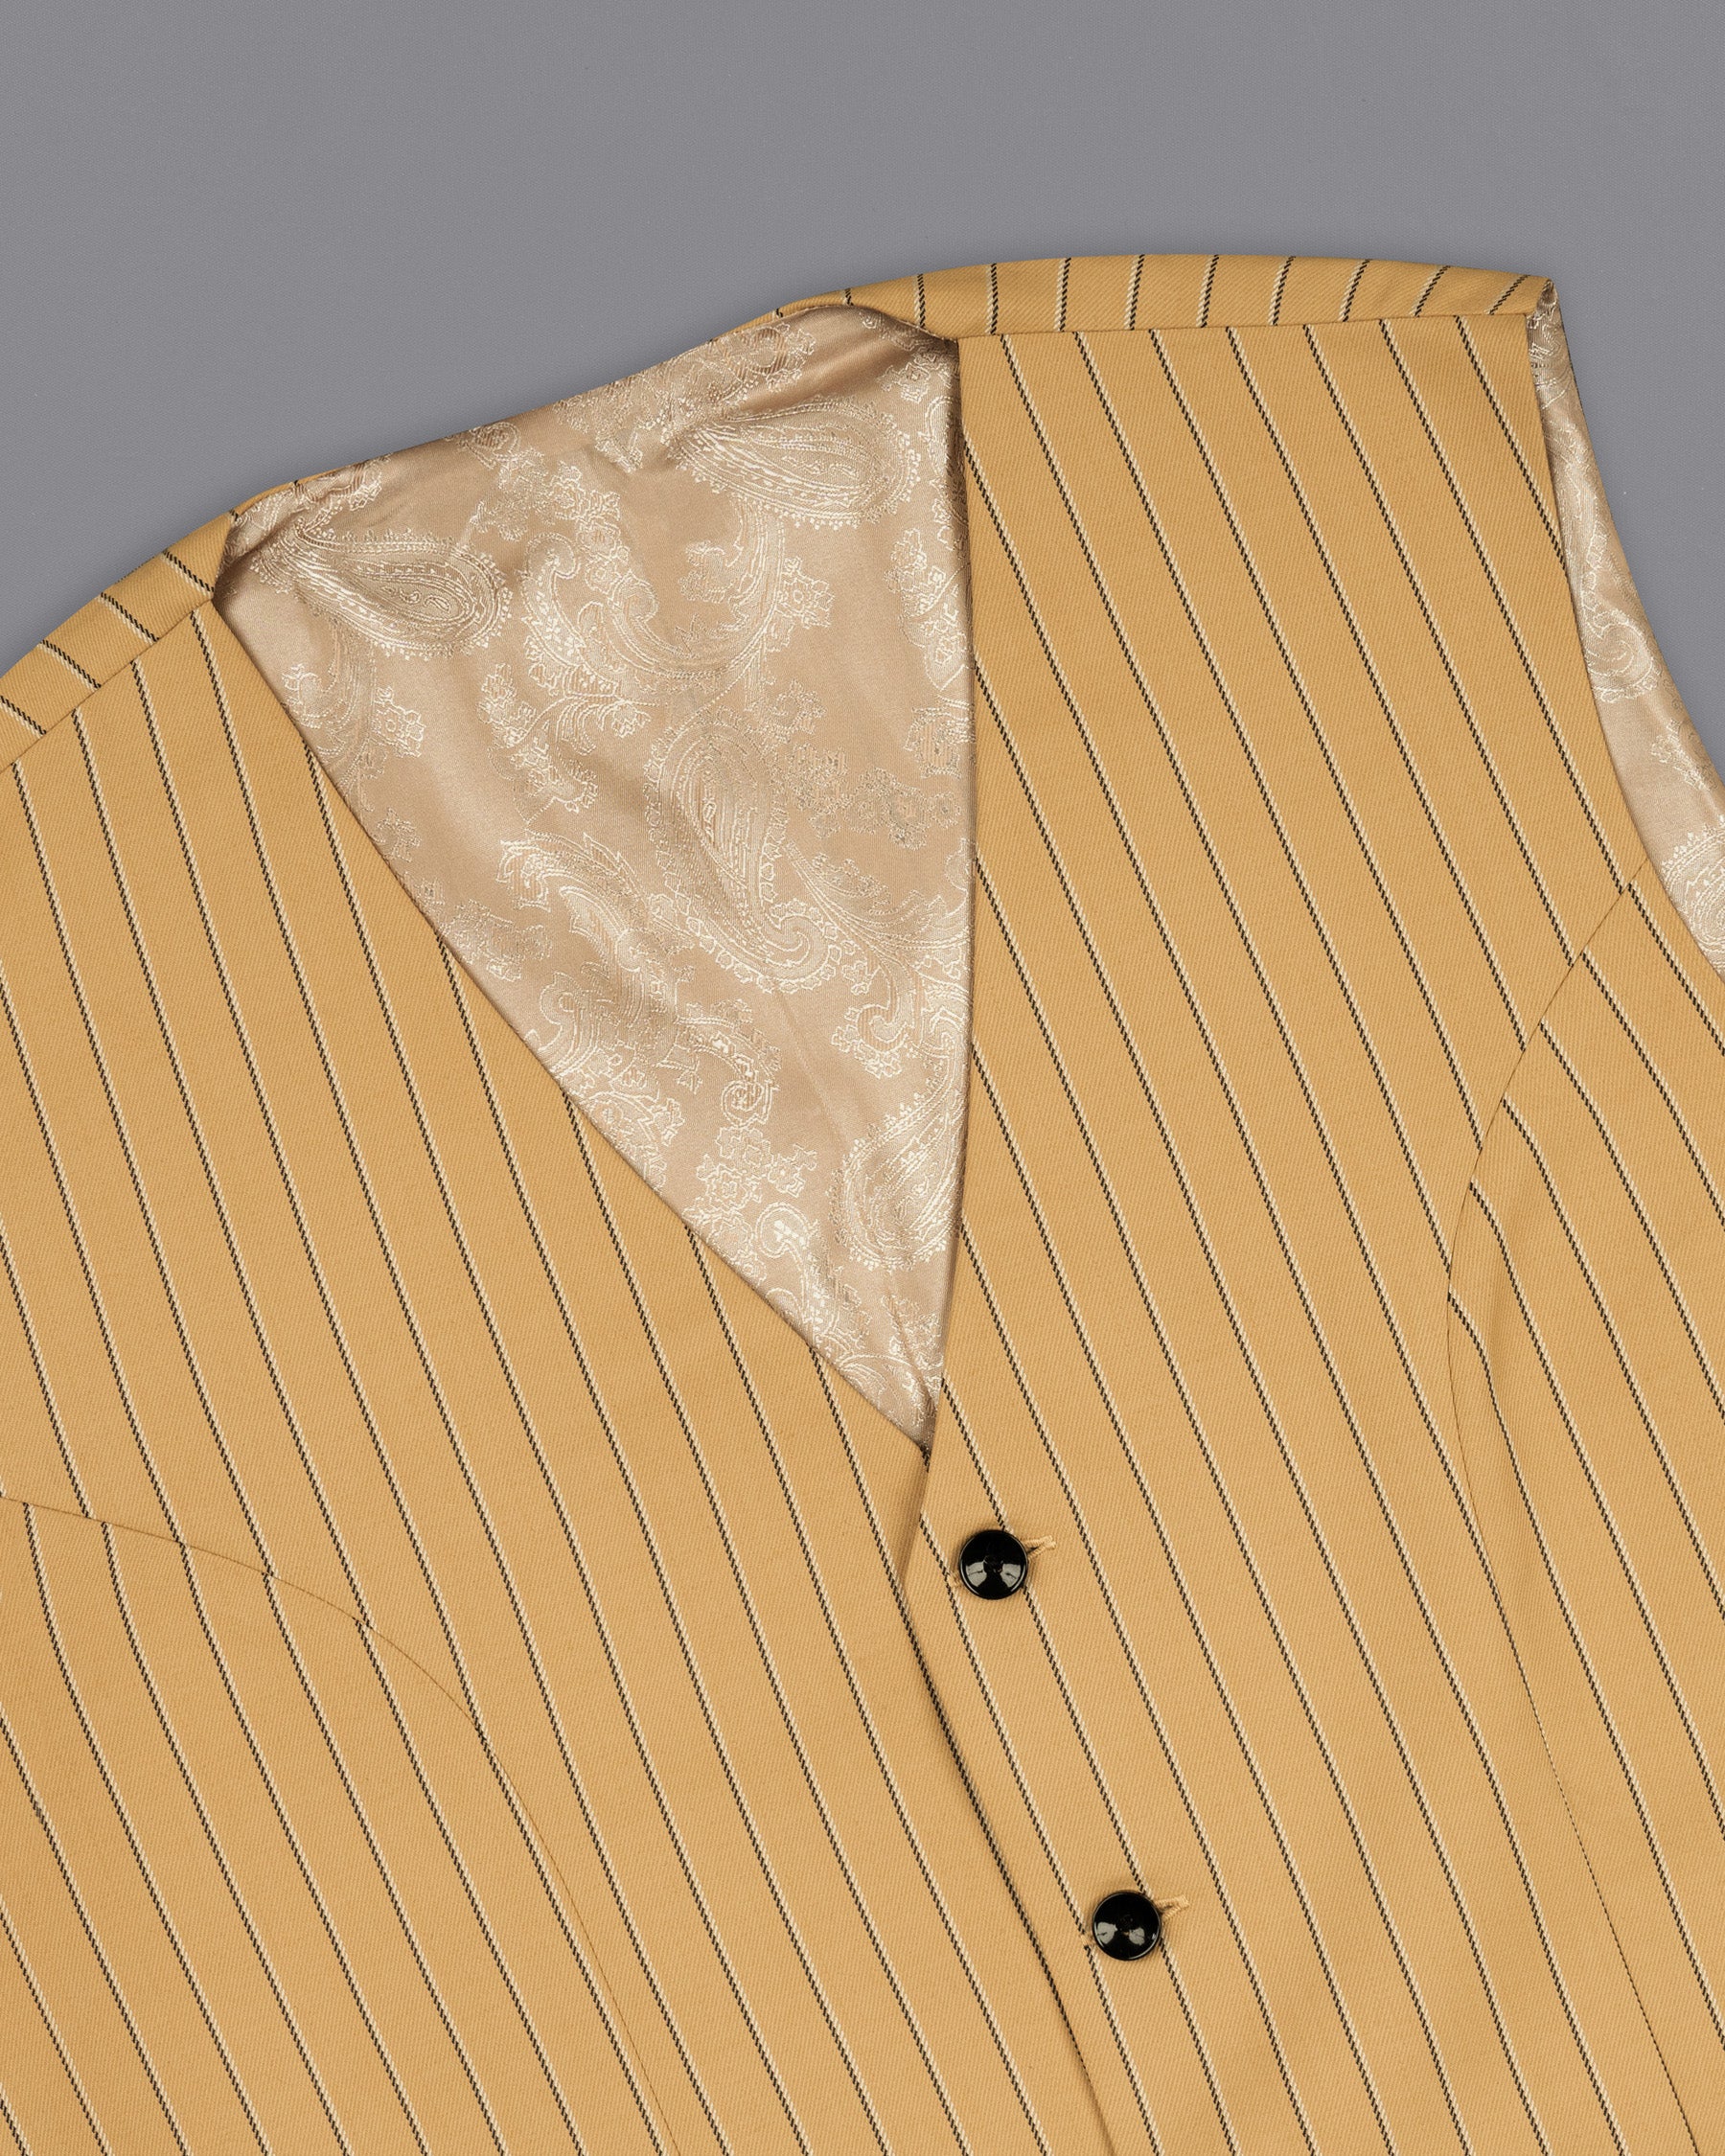 Twine Brown Striped Wool Rich Waistcoat V1511-36, V1511-38, V1511-40, V1511-42, V1511-44, V1511-46, V1511-48, V1511-50, V1511-52, V1511-54, V1511-56, V1511-58, V1511-60